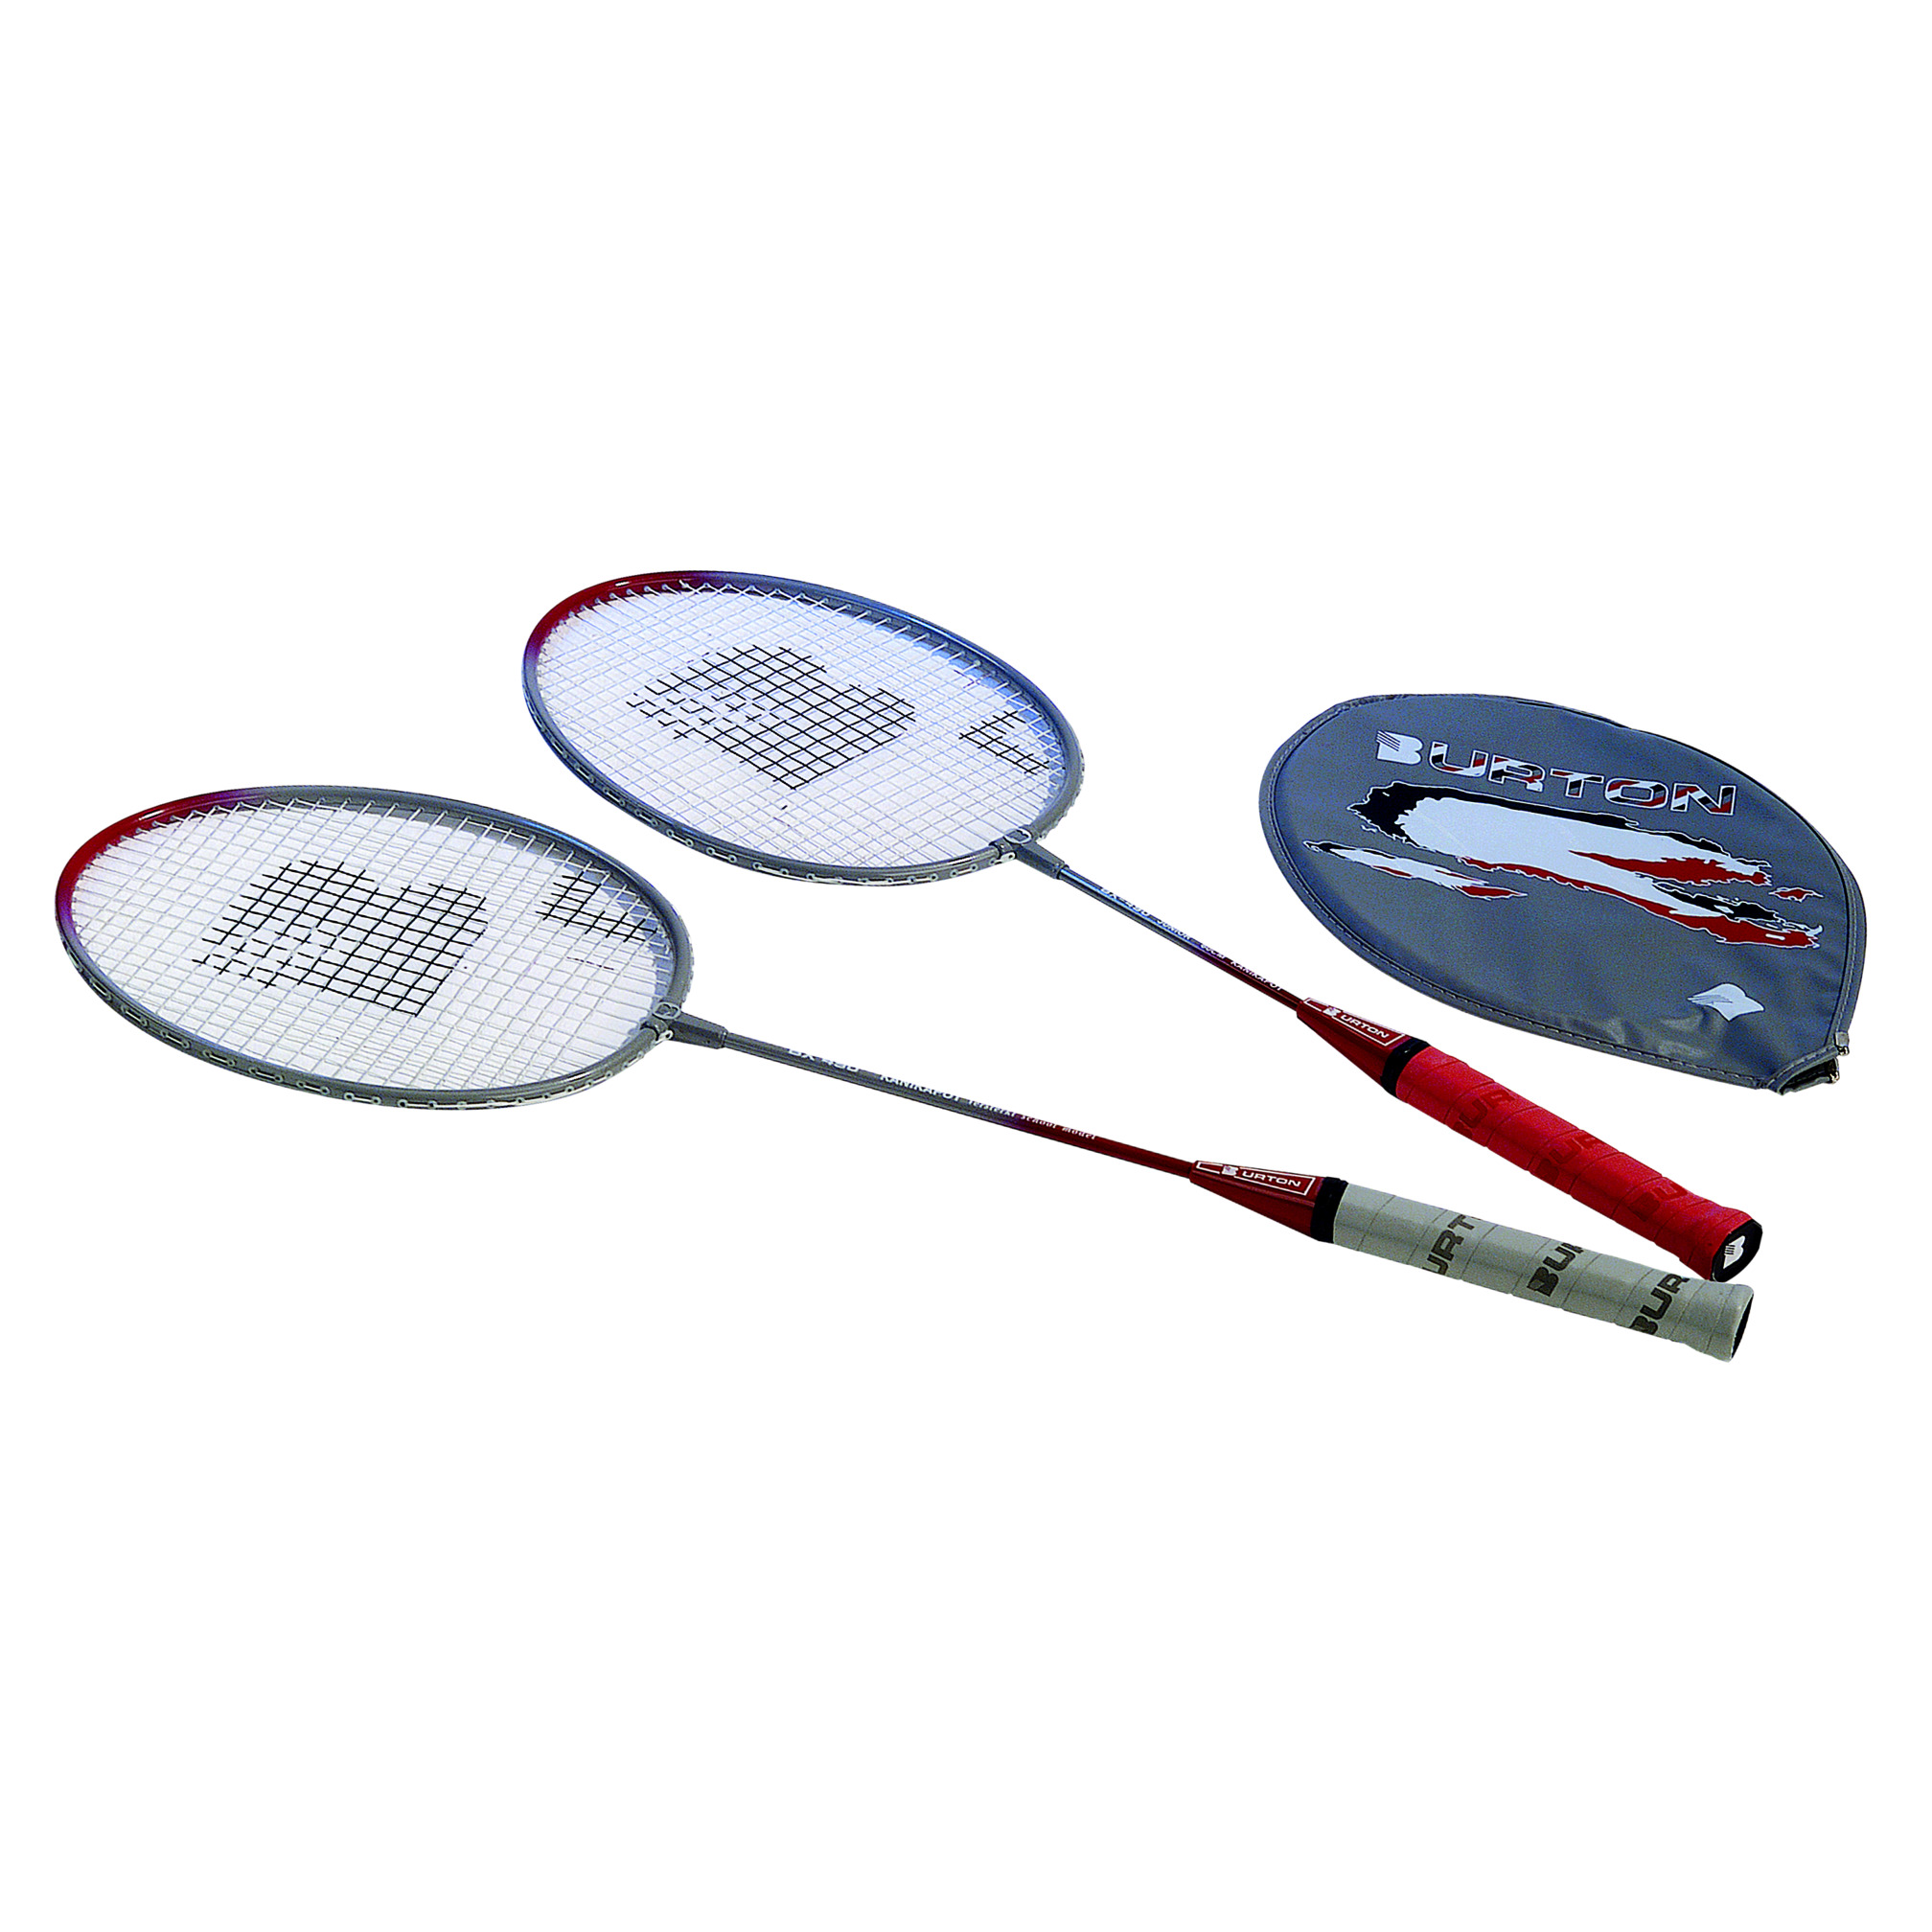 Burton 'Kanikapot' badminton racket , Jr